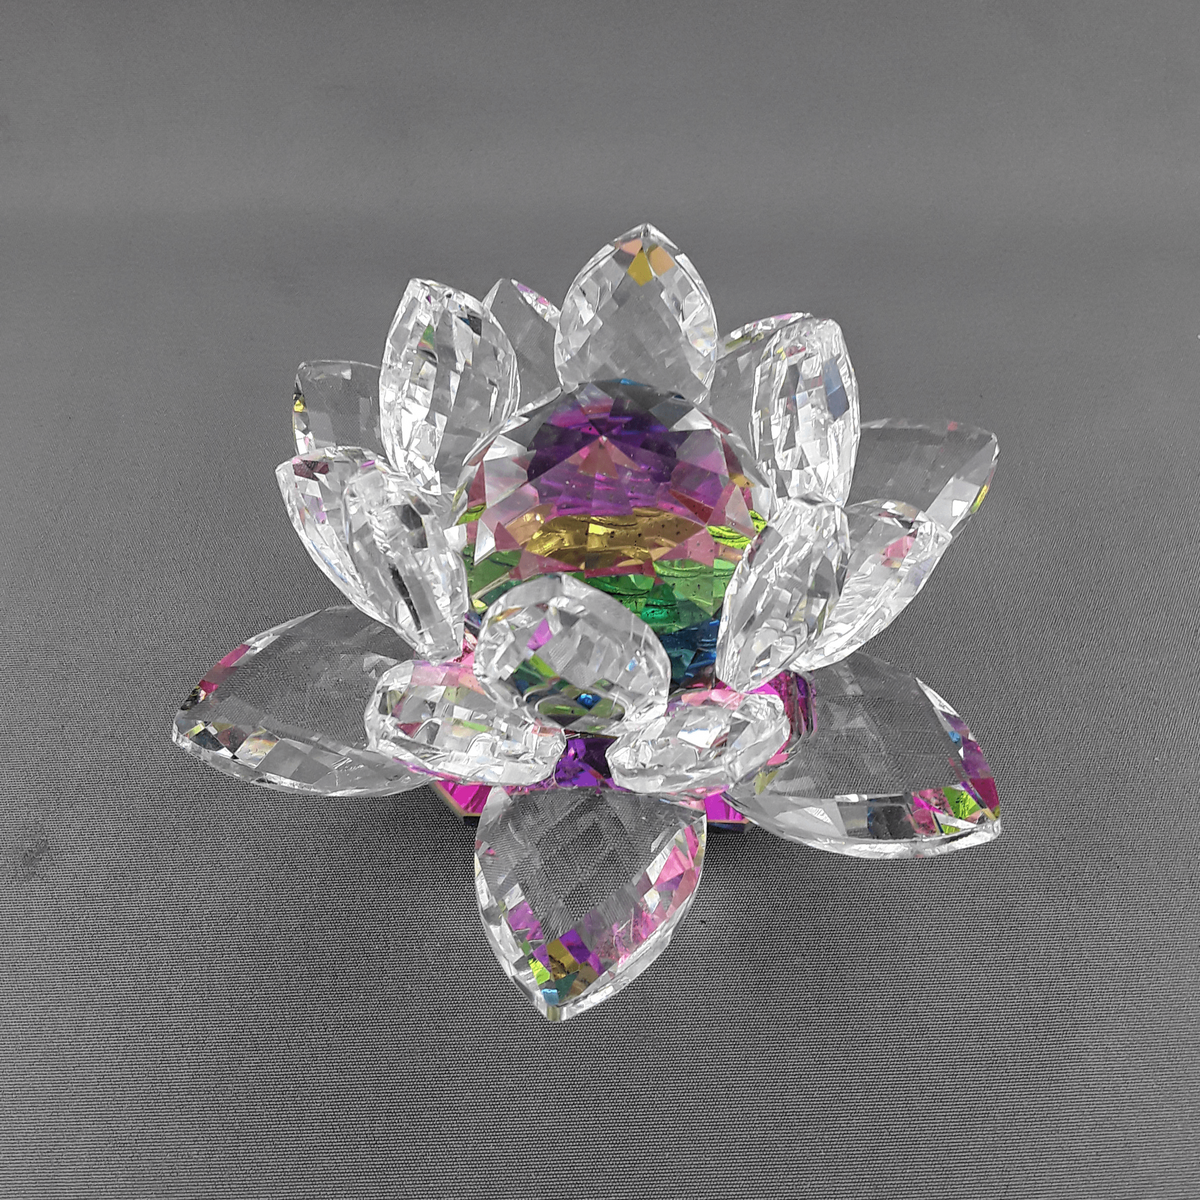 Colour crystal lotus auroraborealis - Birdie’s Nest Inc 